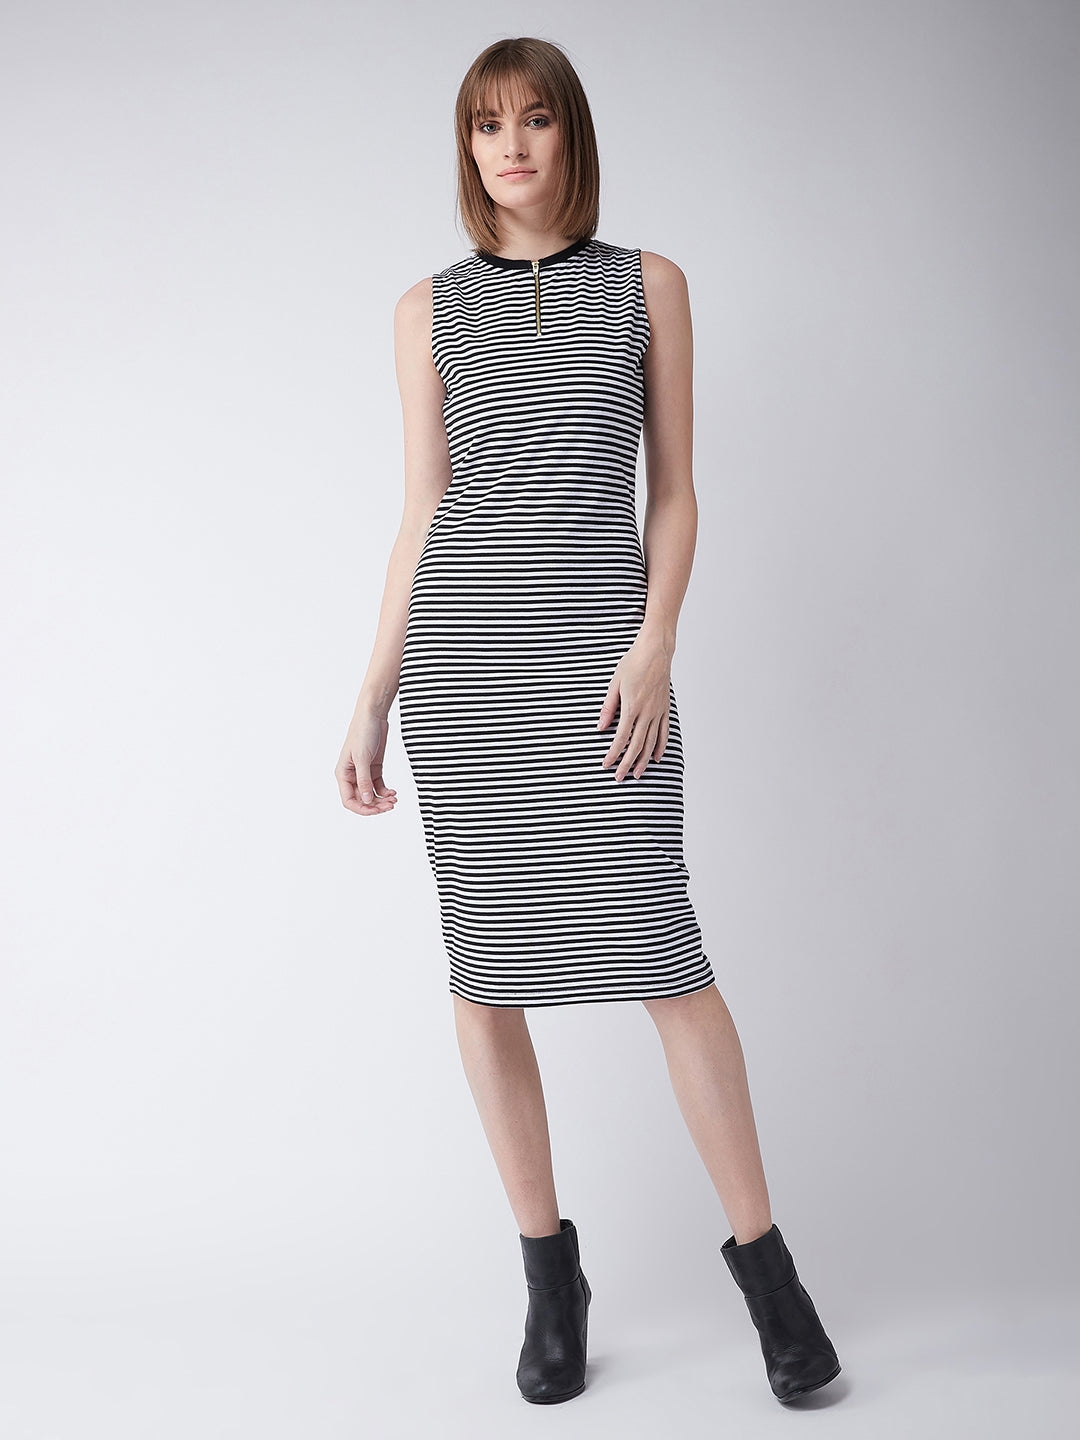 MISS CHASE | Black and White Round Neck Sleeveless Striped Bodycon Dress